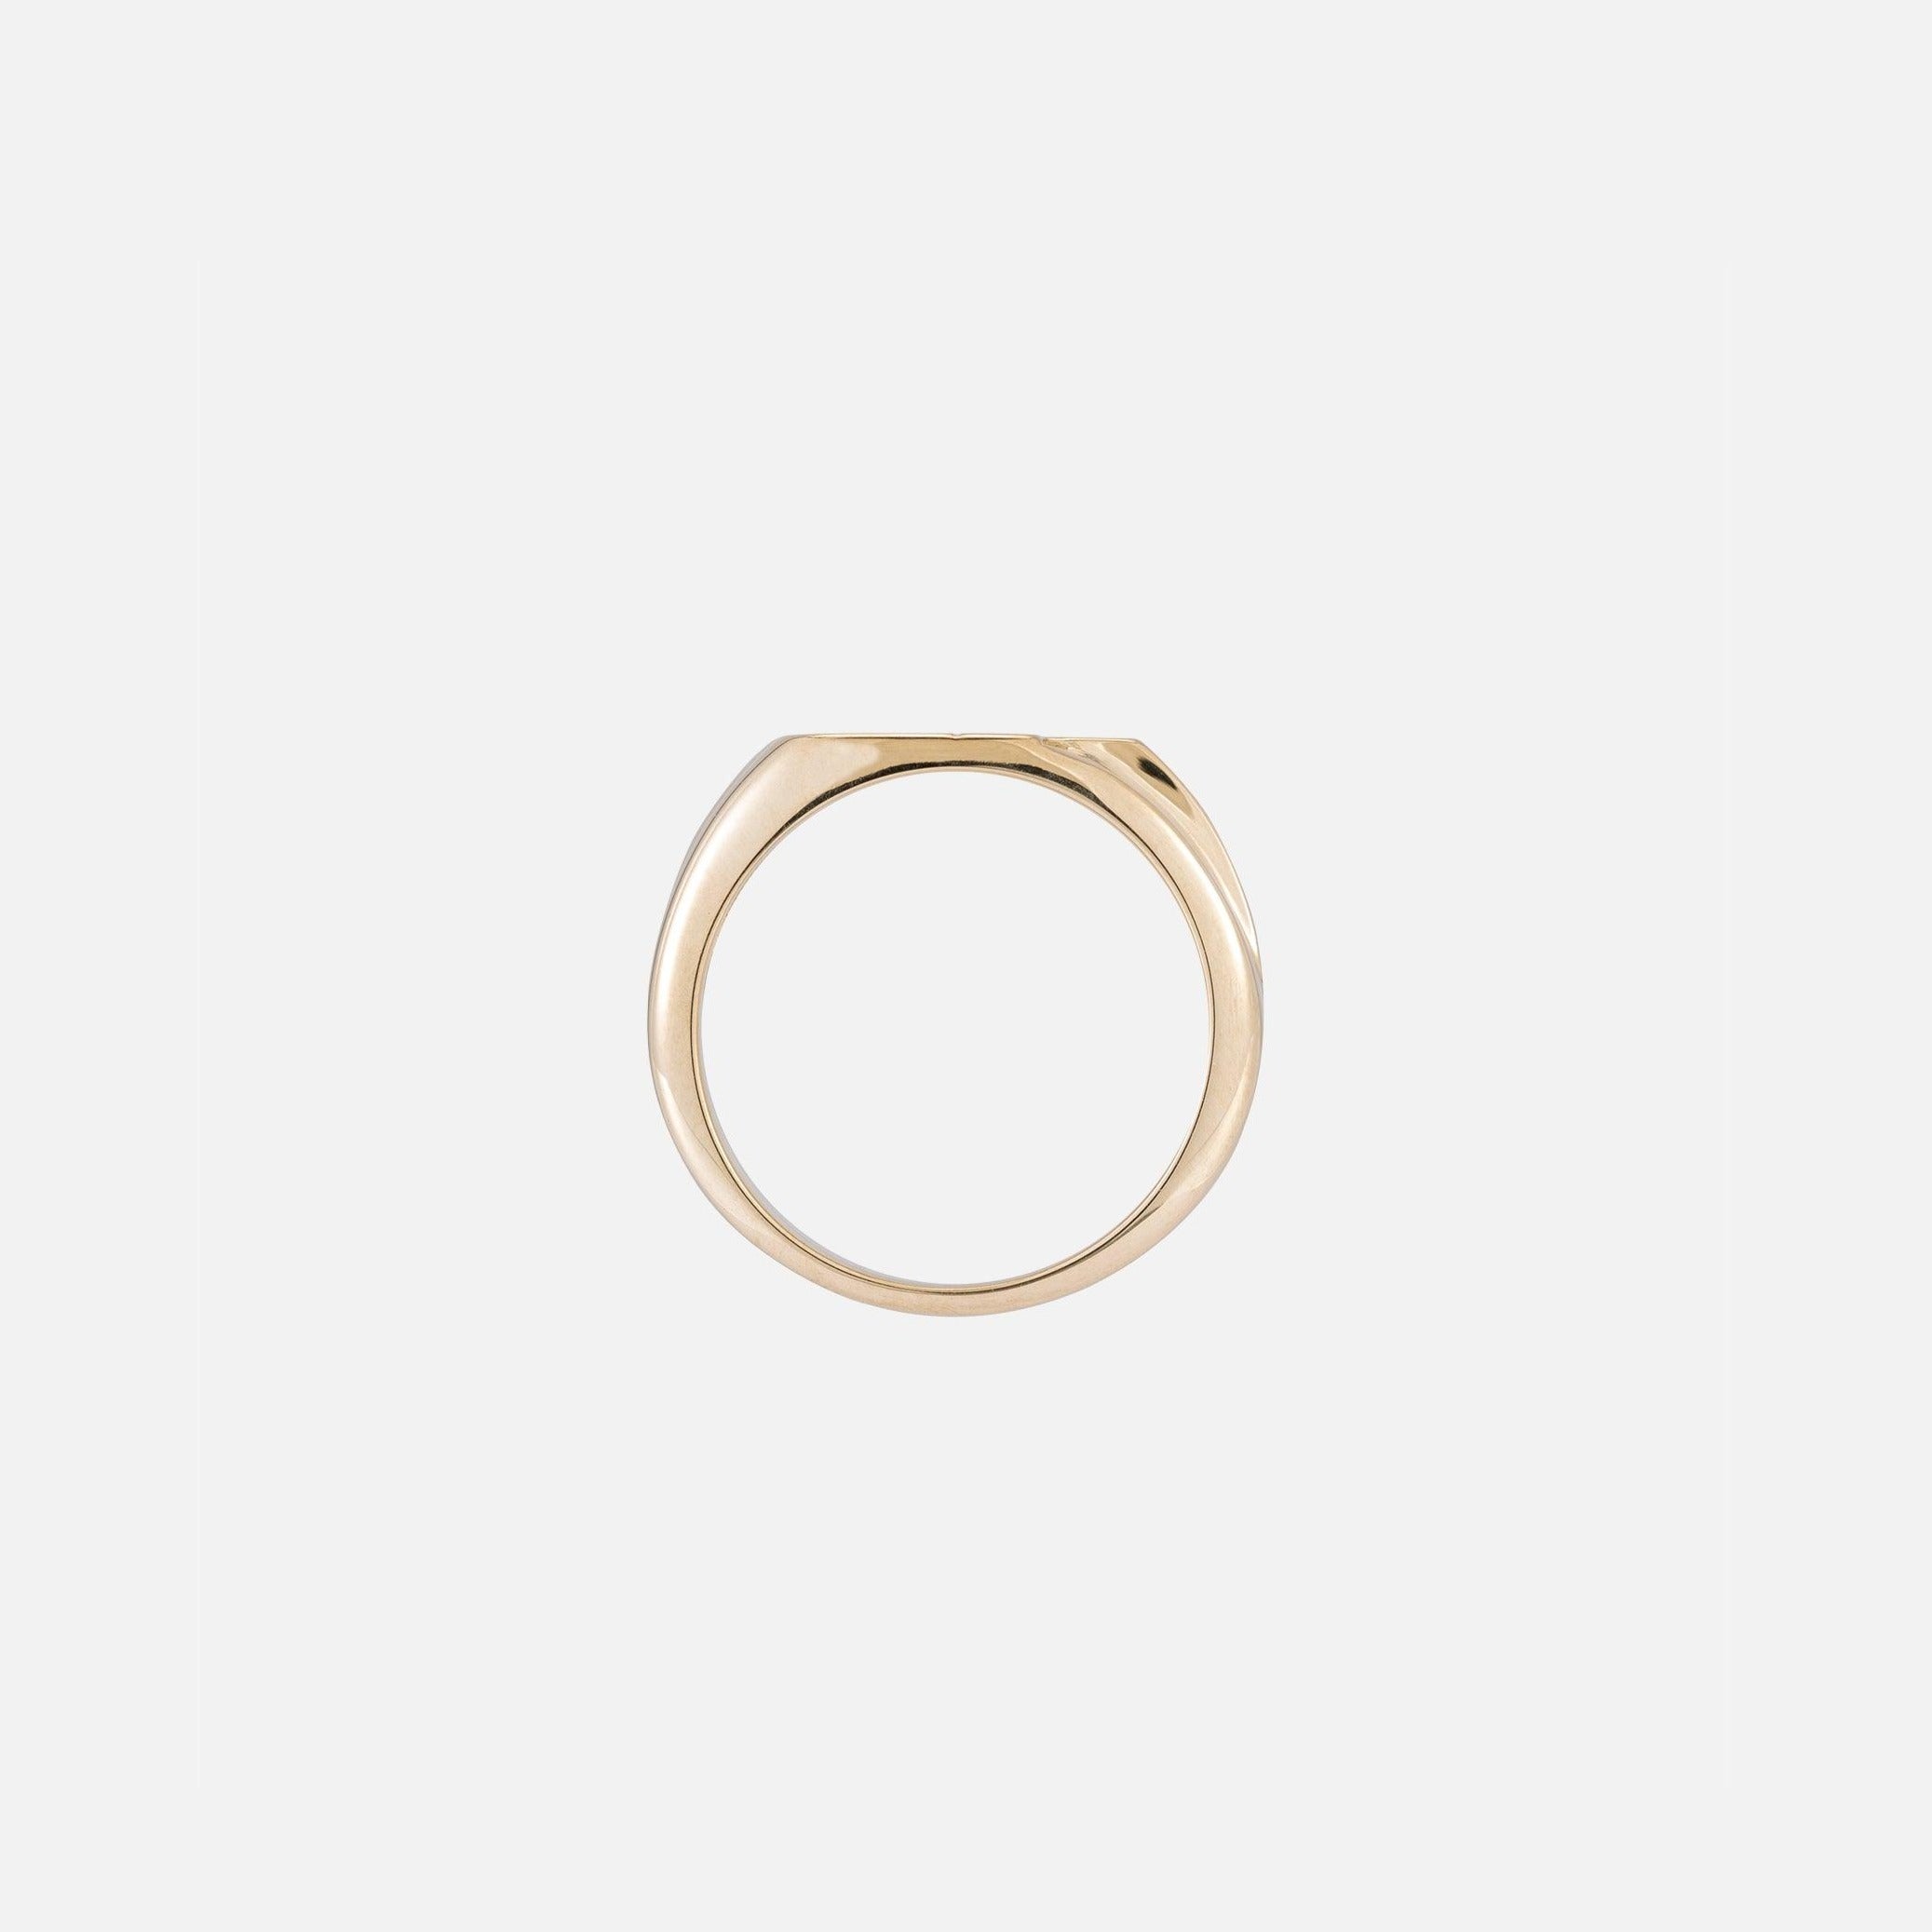 Moniker Ring - Ariel Gordon Jewelry - At Present